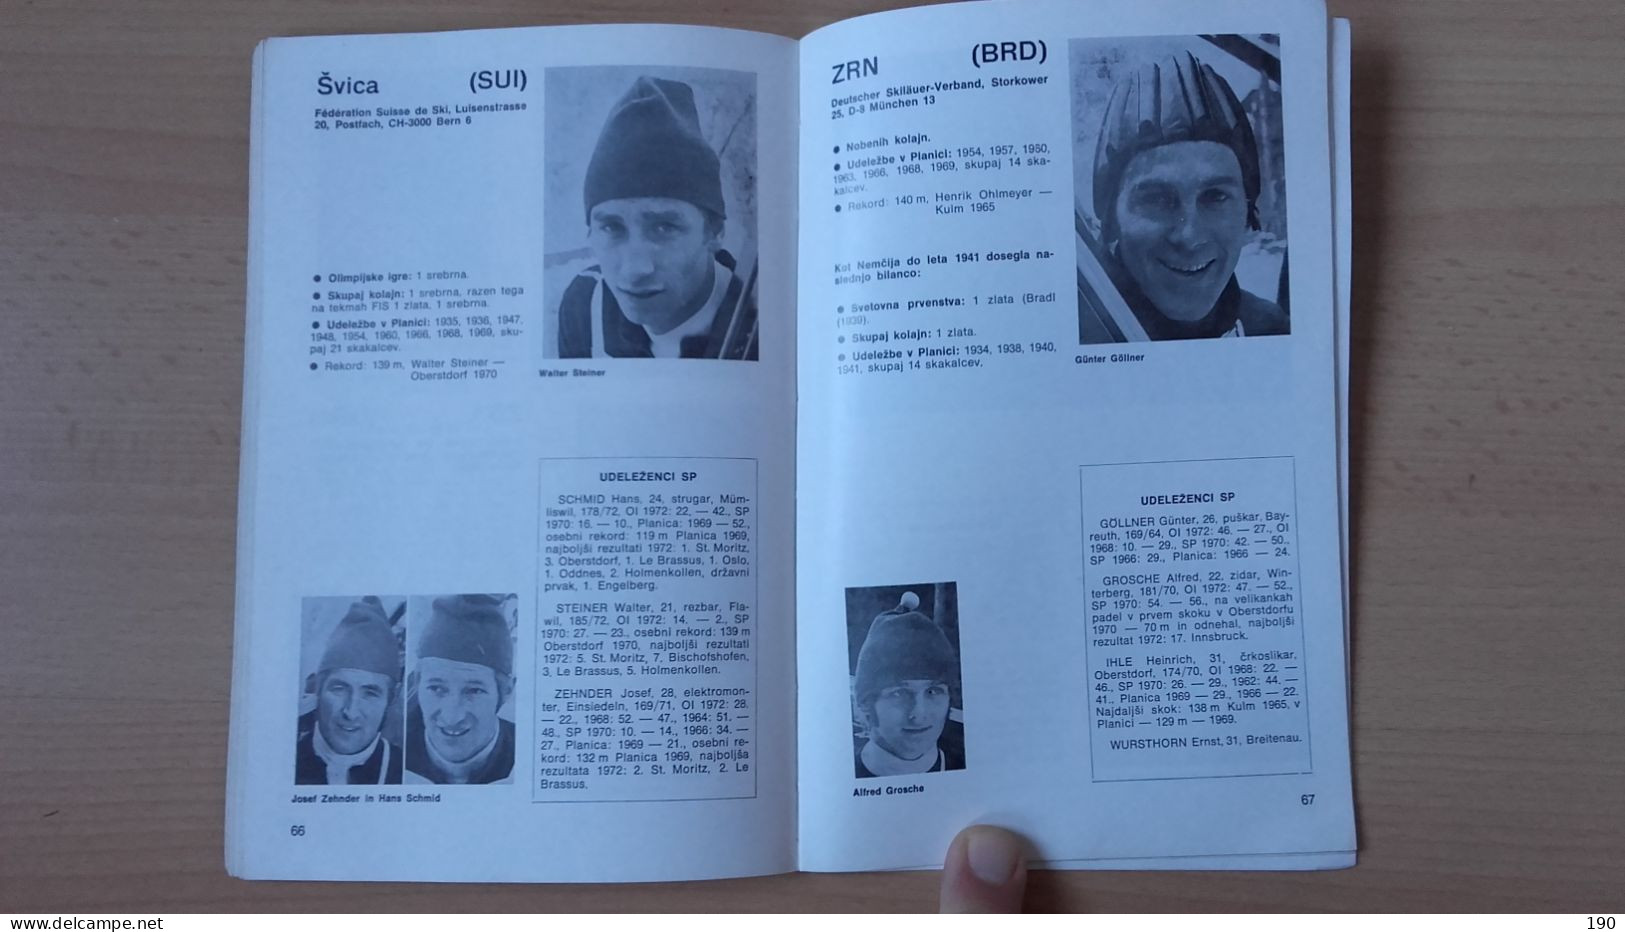 Ski Jumping.FIS.Planica 1934-1972 - Slavische Talen